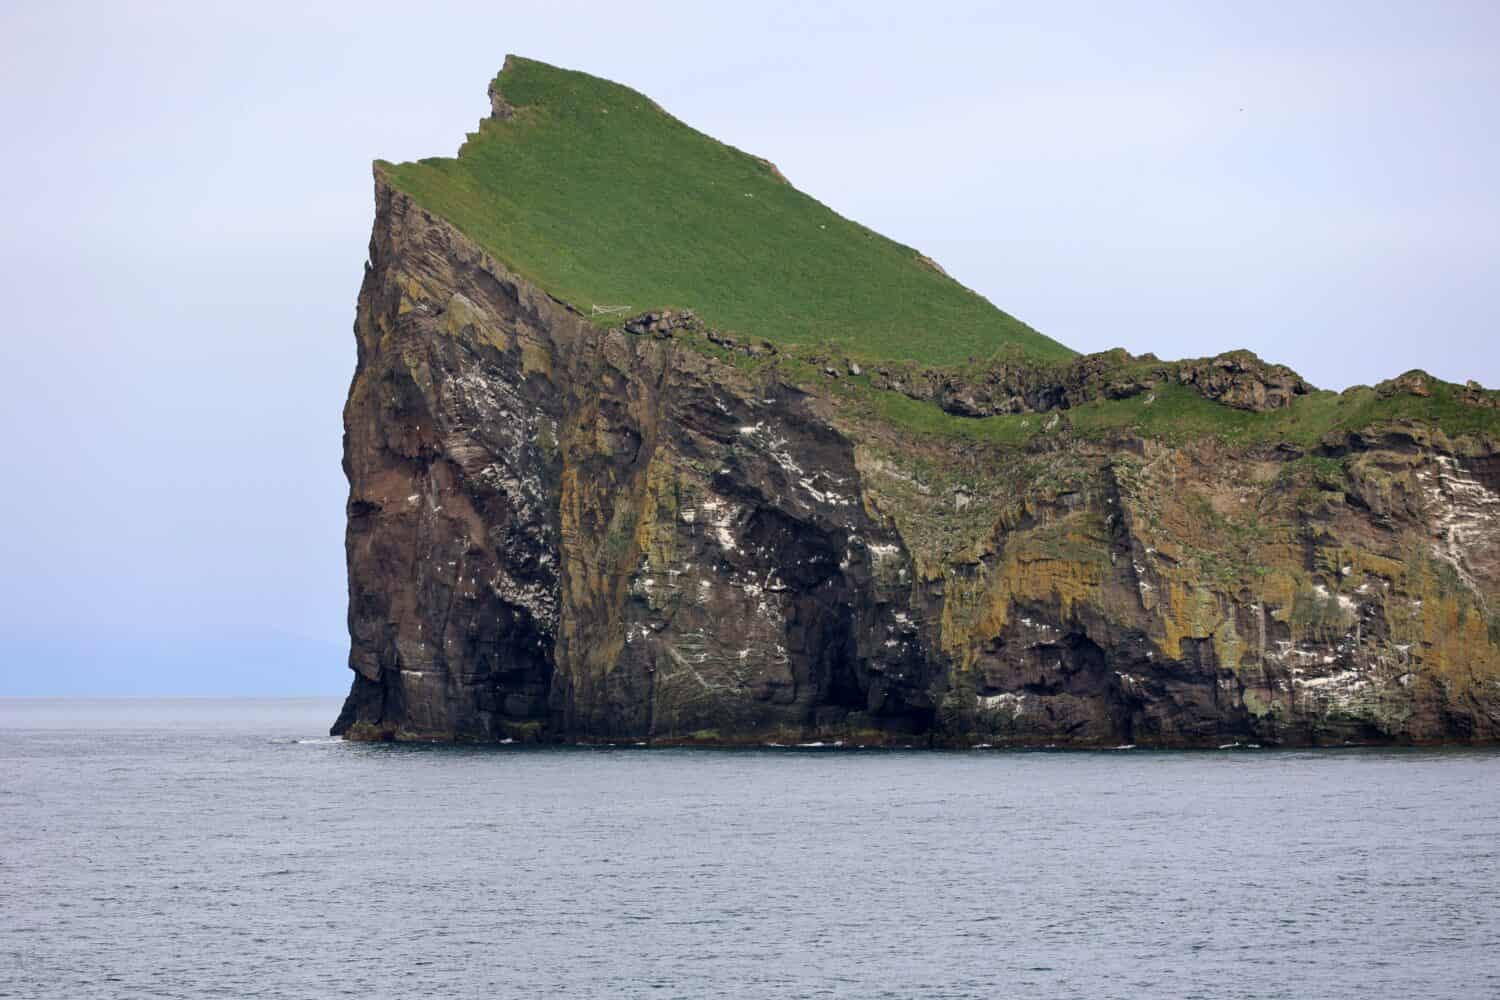 The Icelandic island of Ellidaey in the Vestmannaeyjar archipelago   